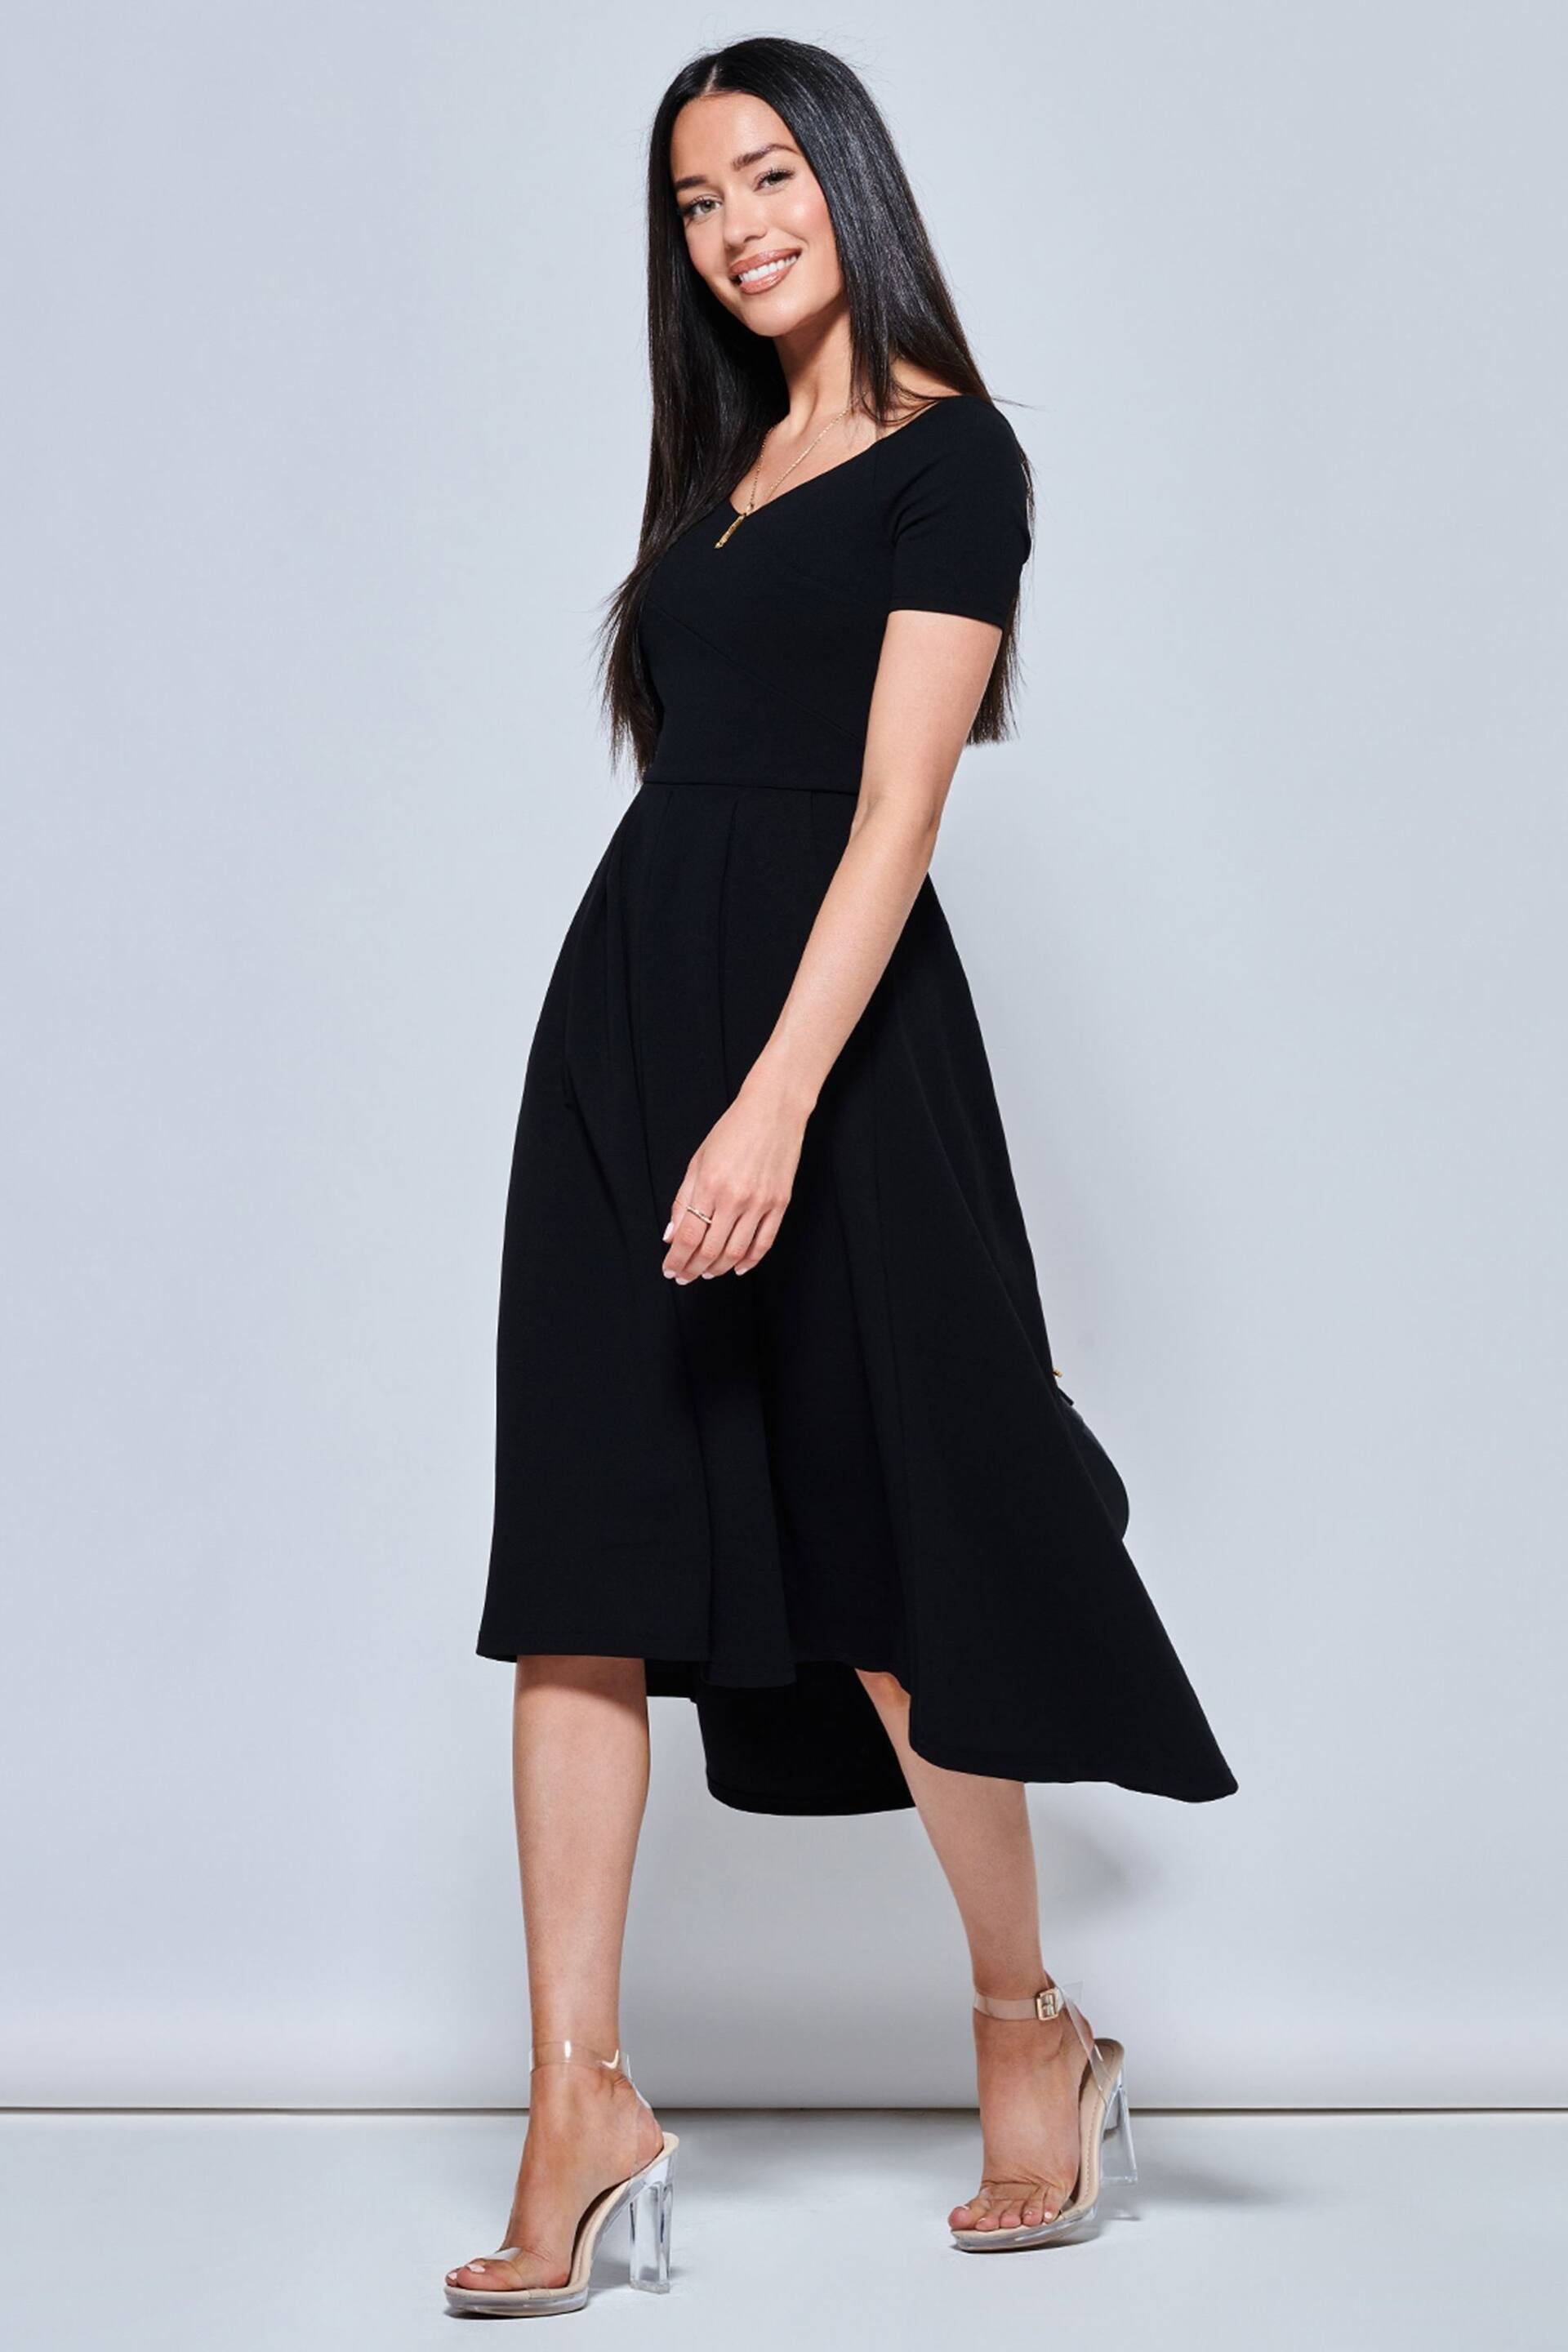 Jolie Moi Black Lenora Fit & Flare Midi Dress - Image 4 of 5